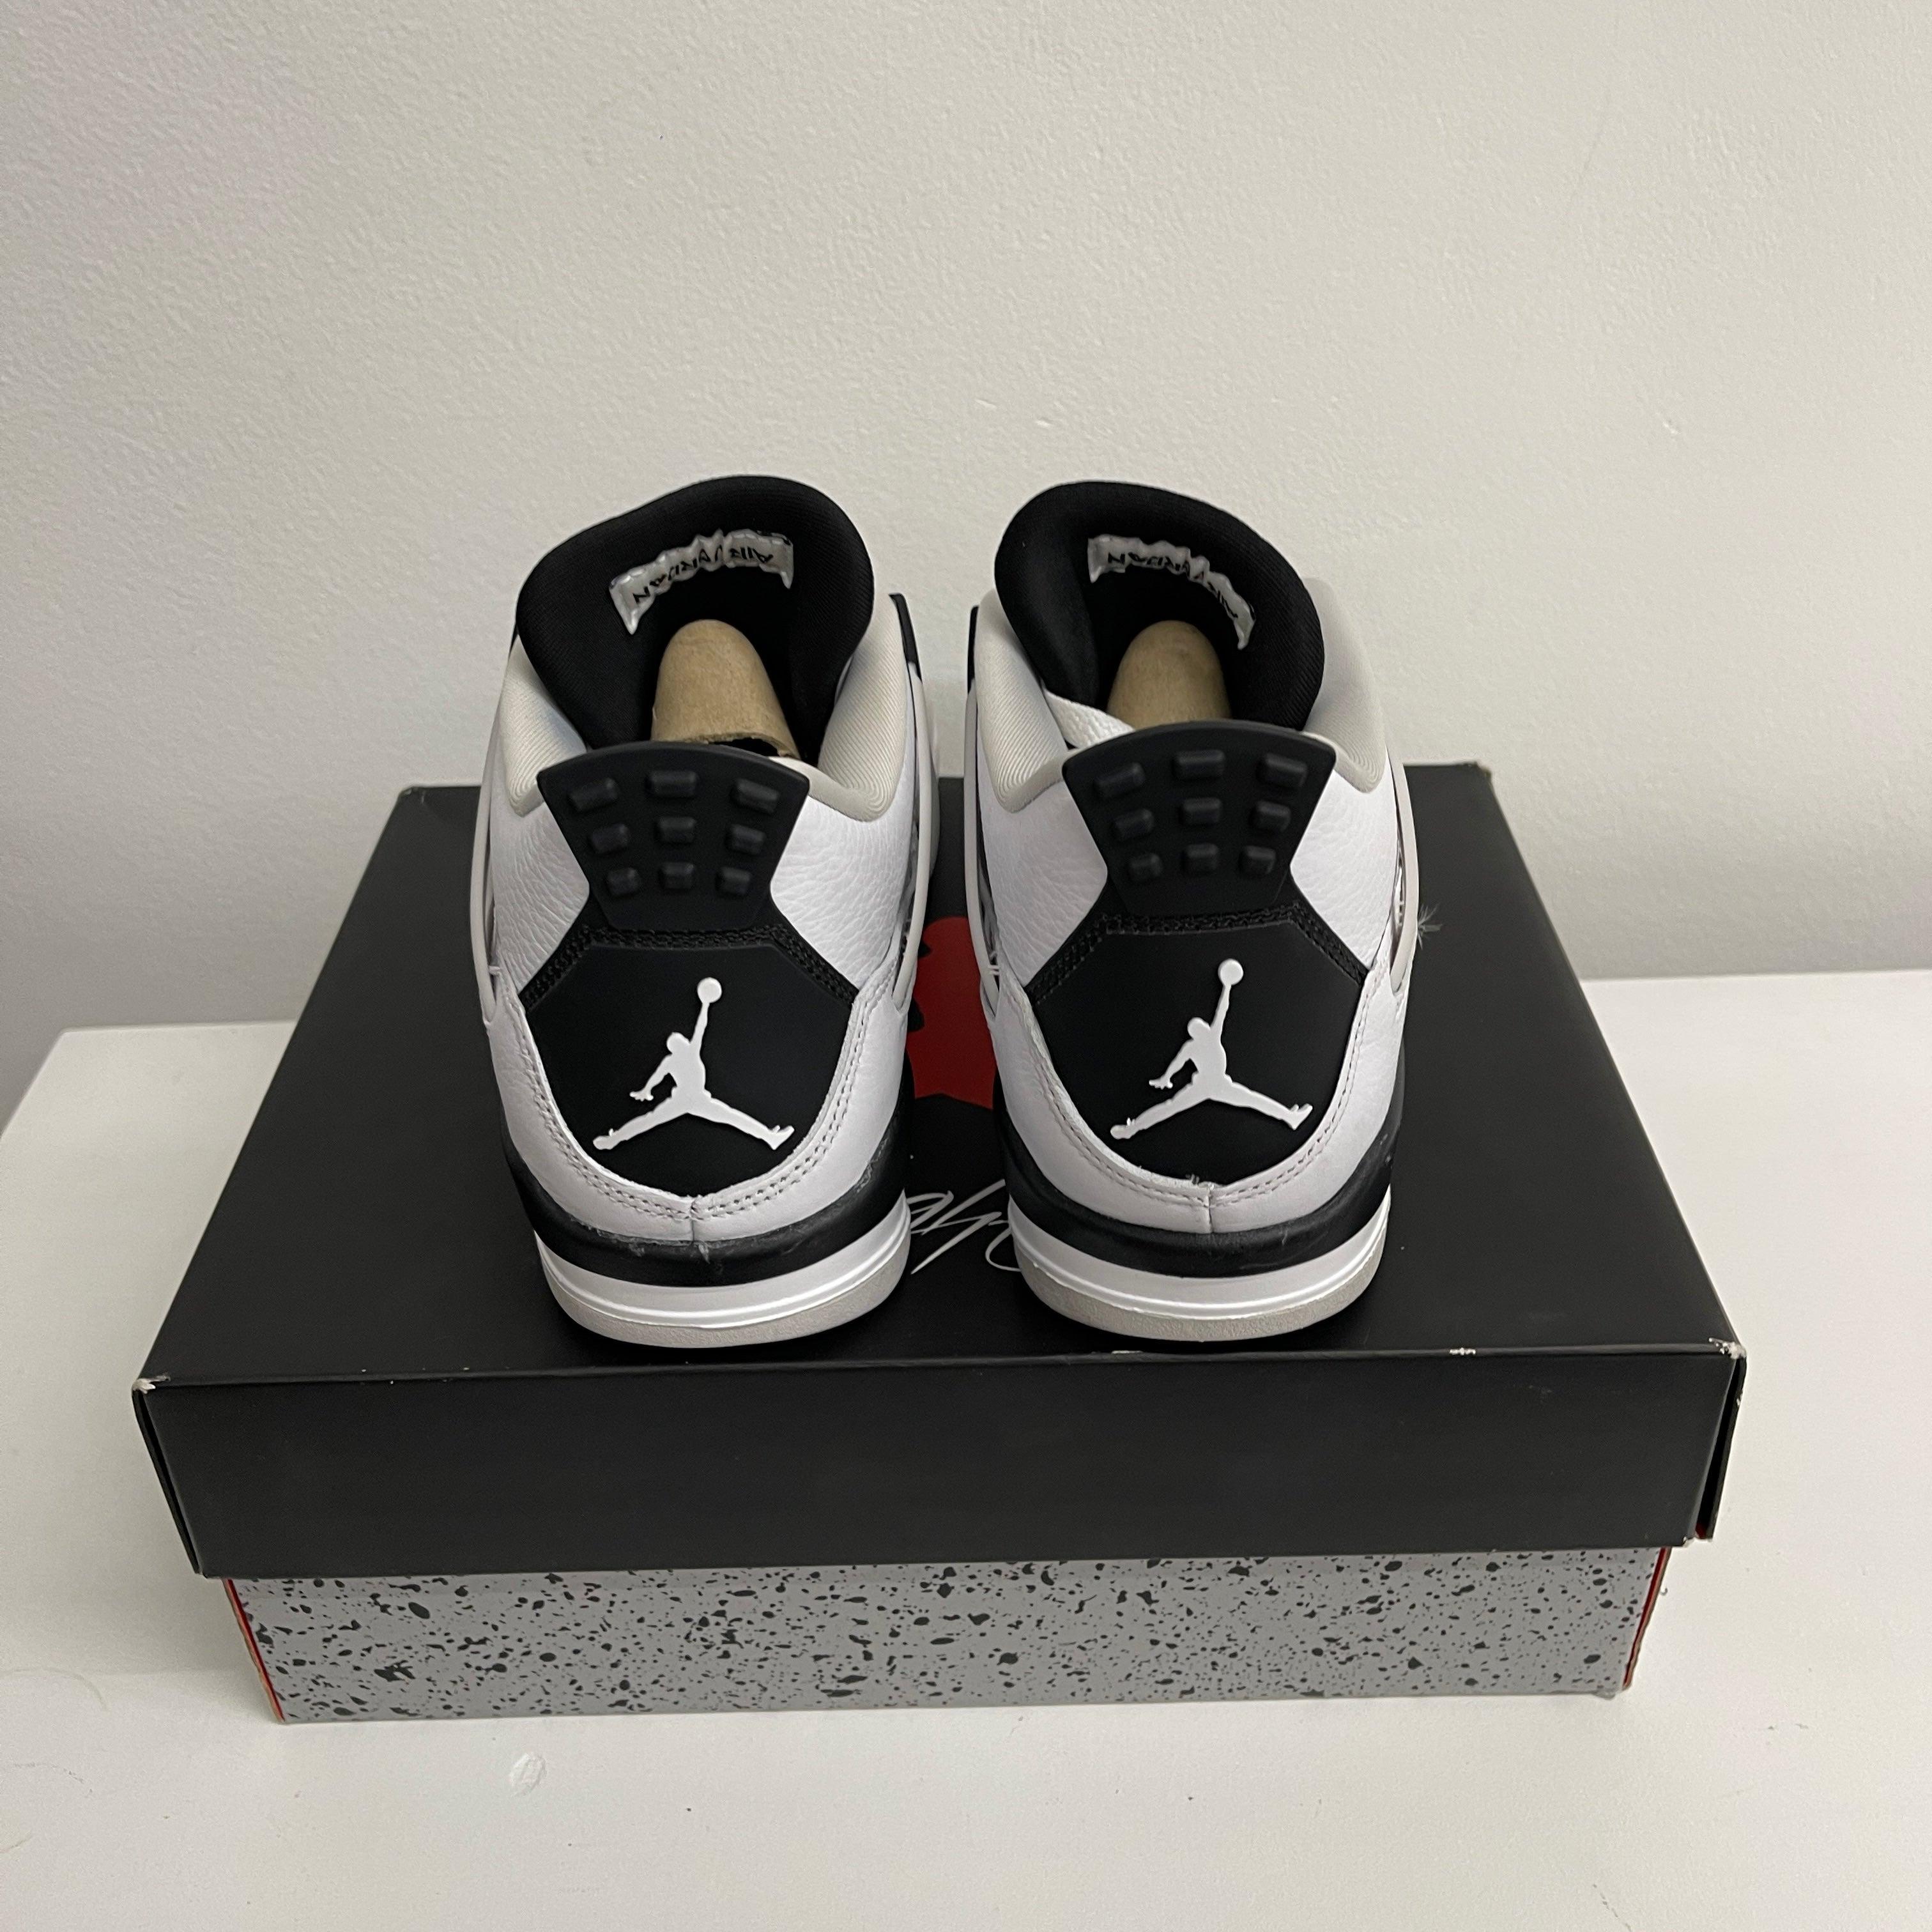 111 – Rvce Shop - Air Jordan 4 Retro Military Black (GS) - Nike